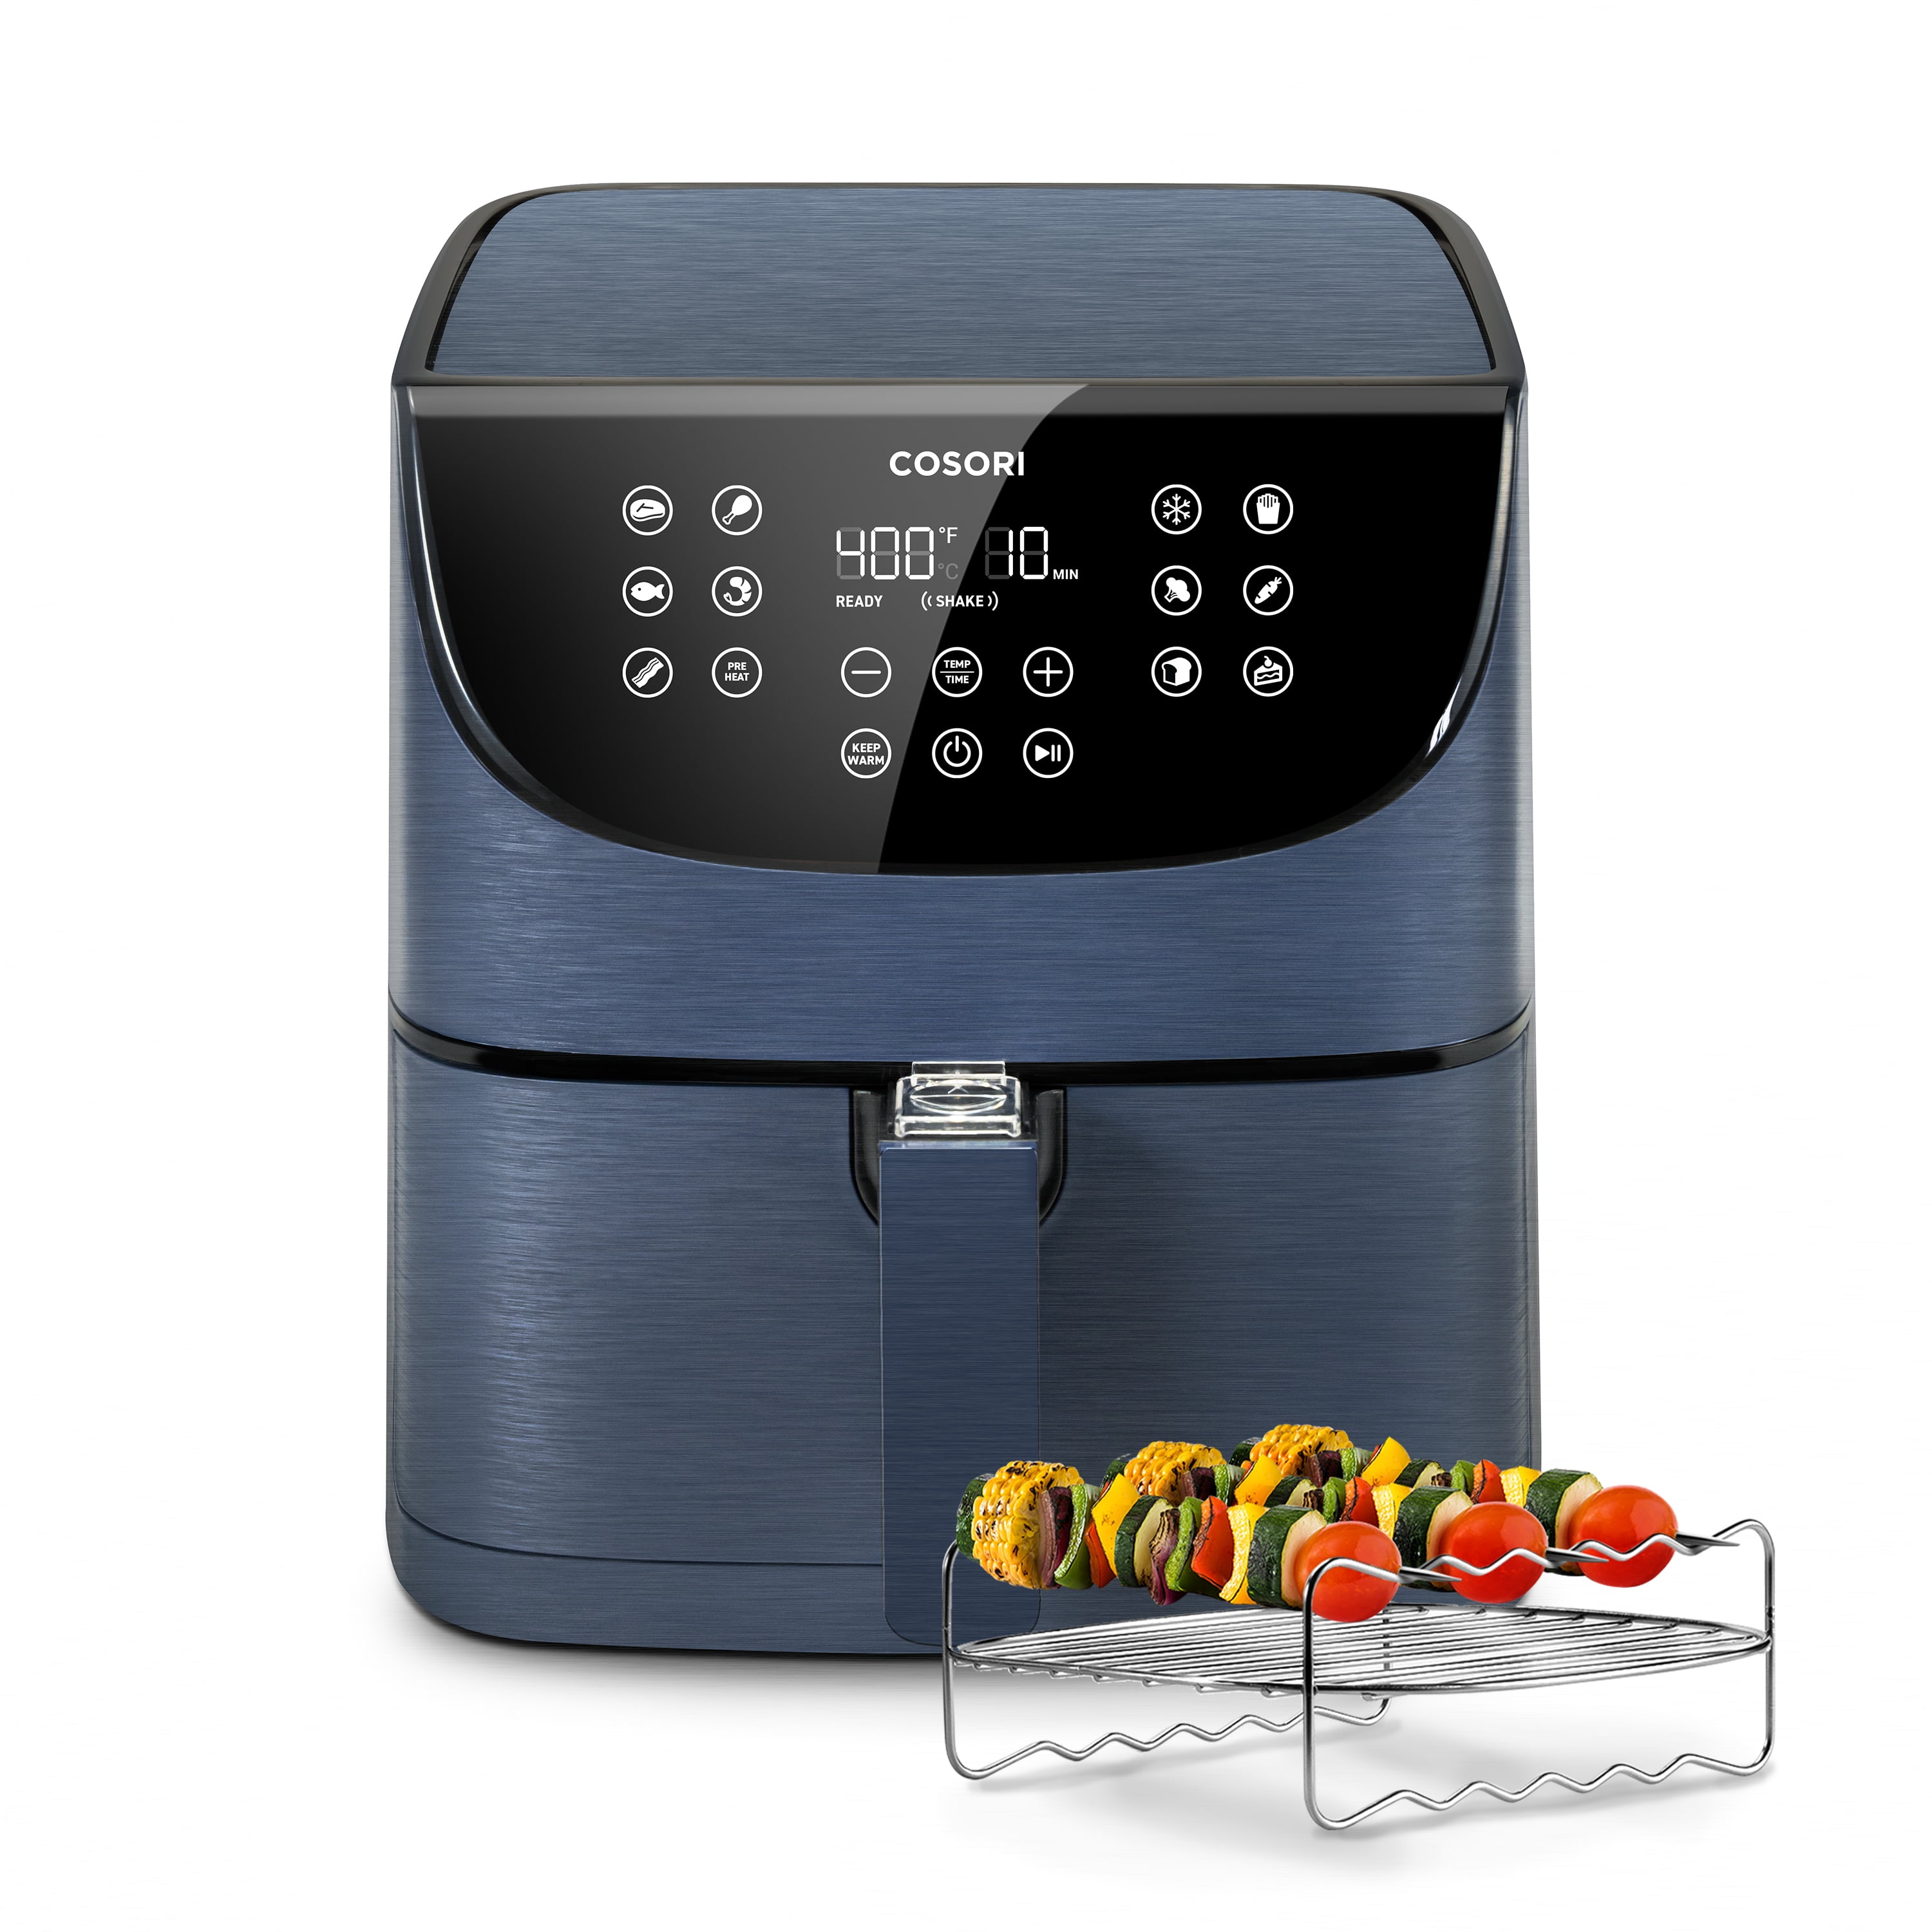 Cosori Pro Le 5.0-Quart Air Fryer